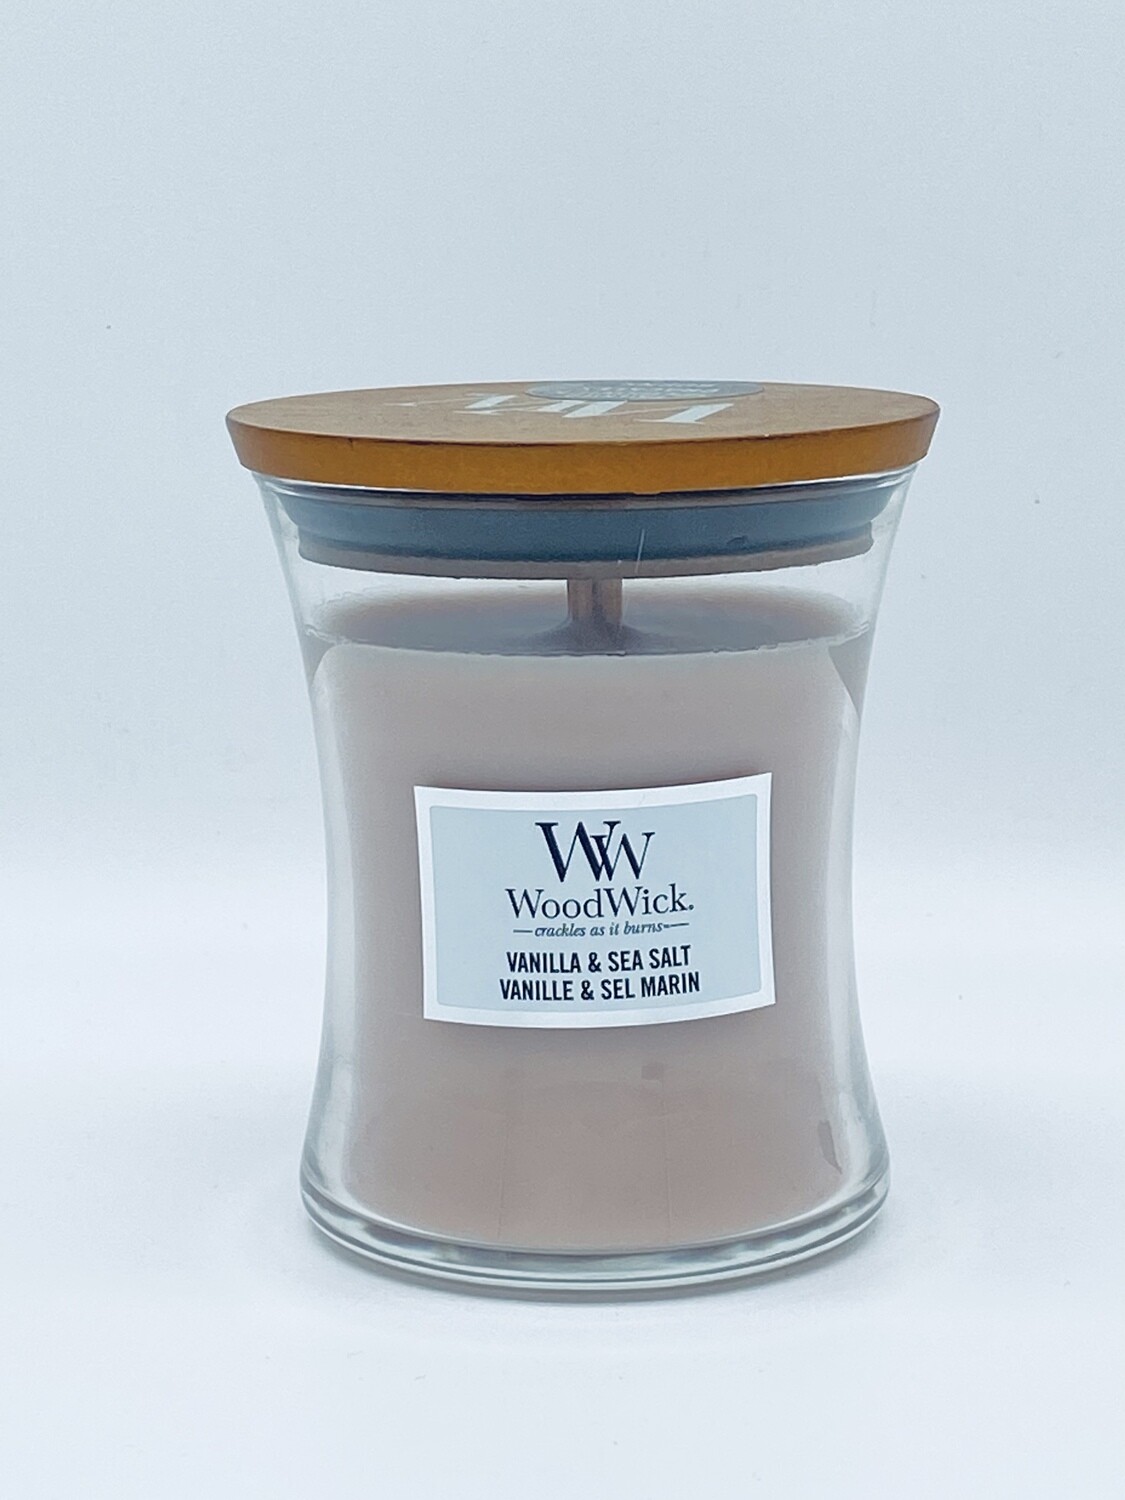 Woodwick medium vanilla and sea salt